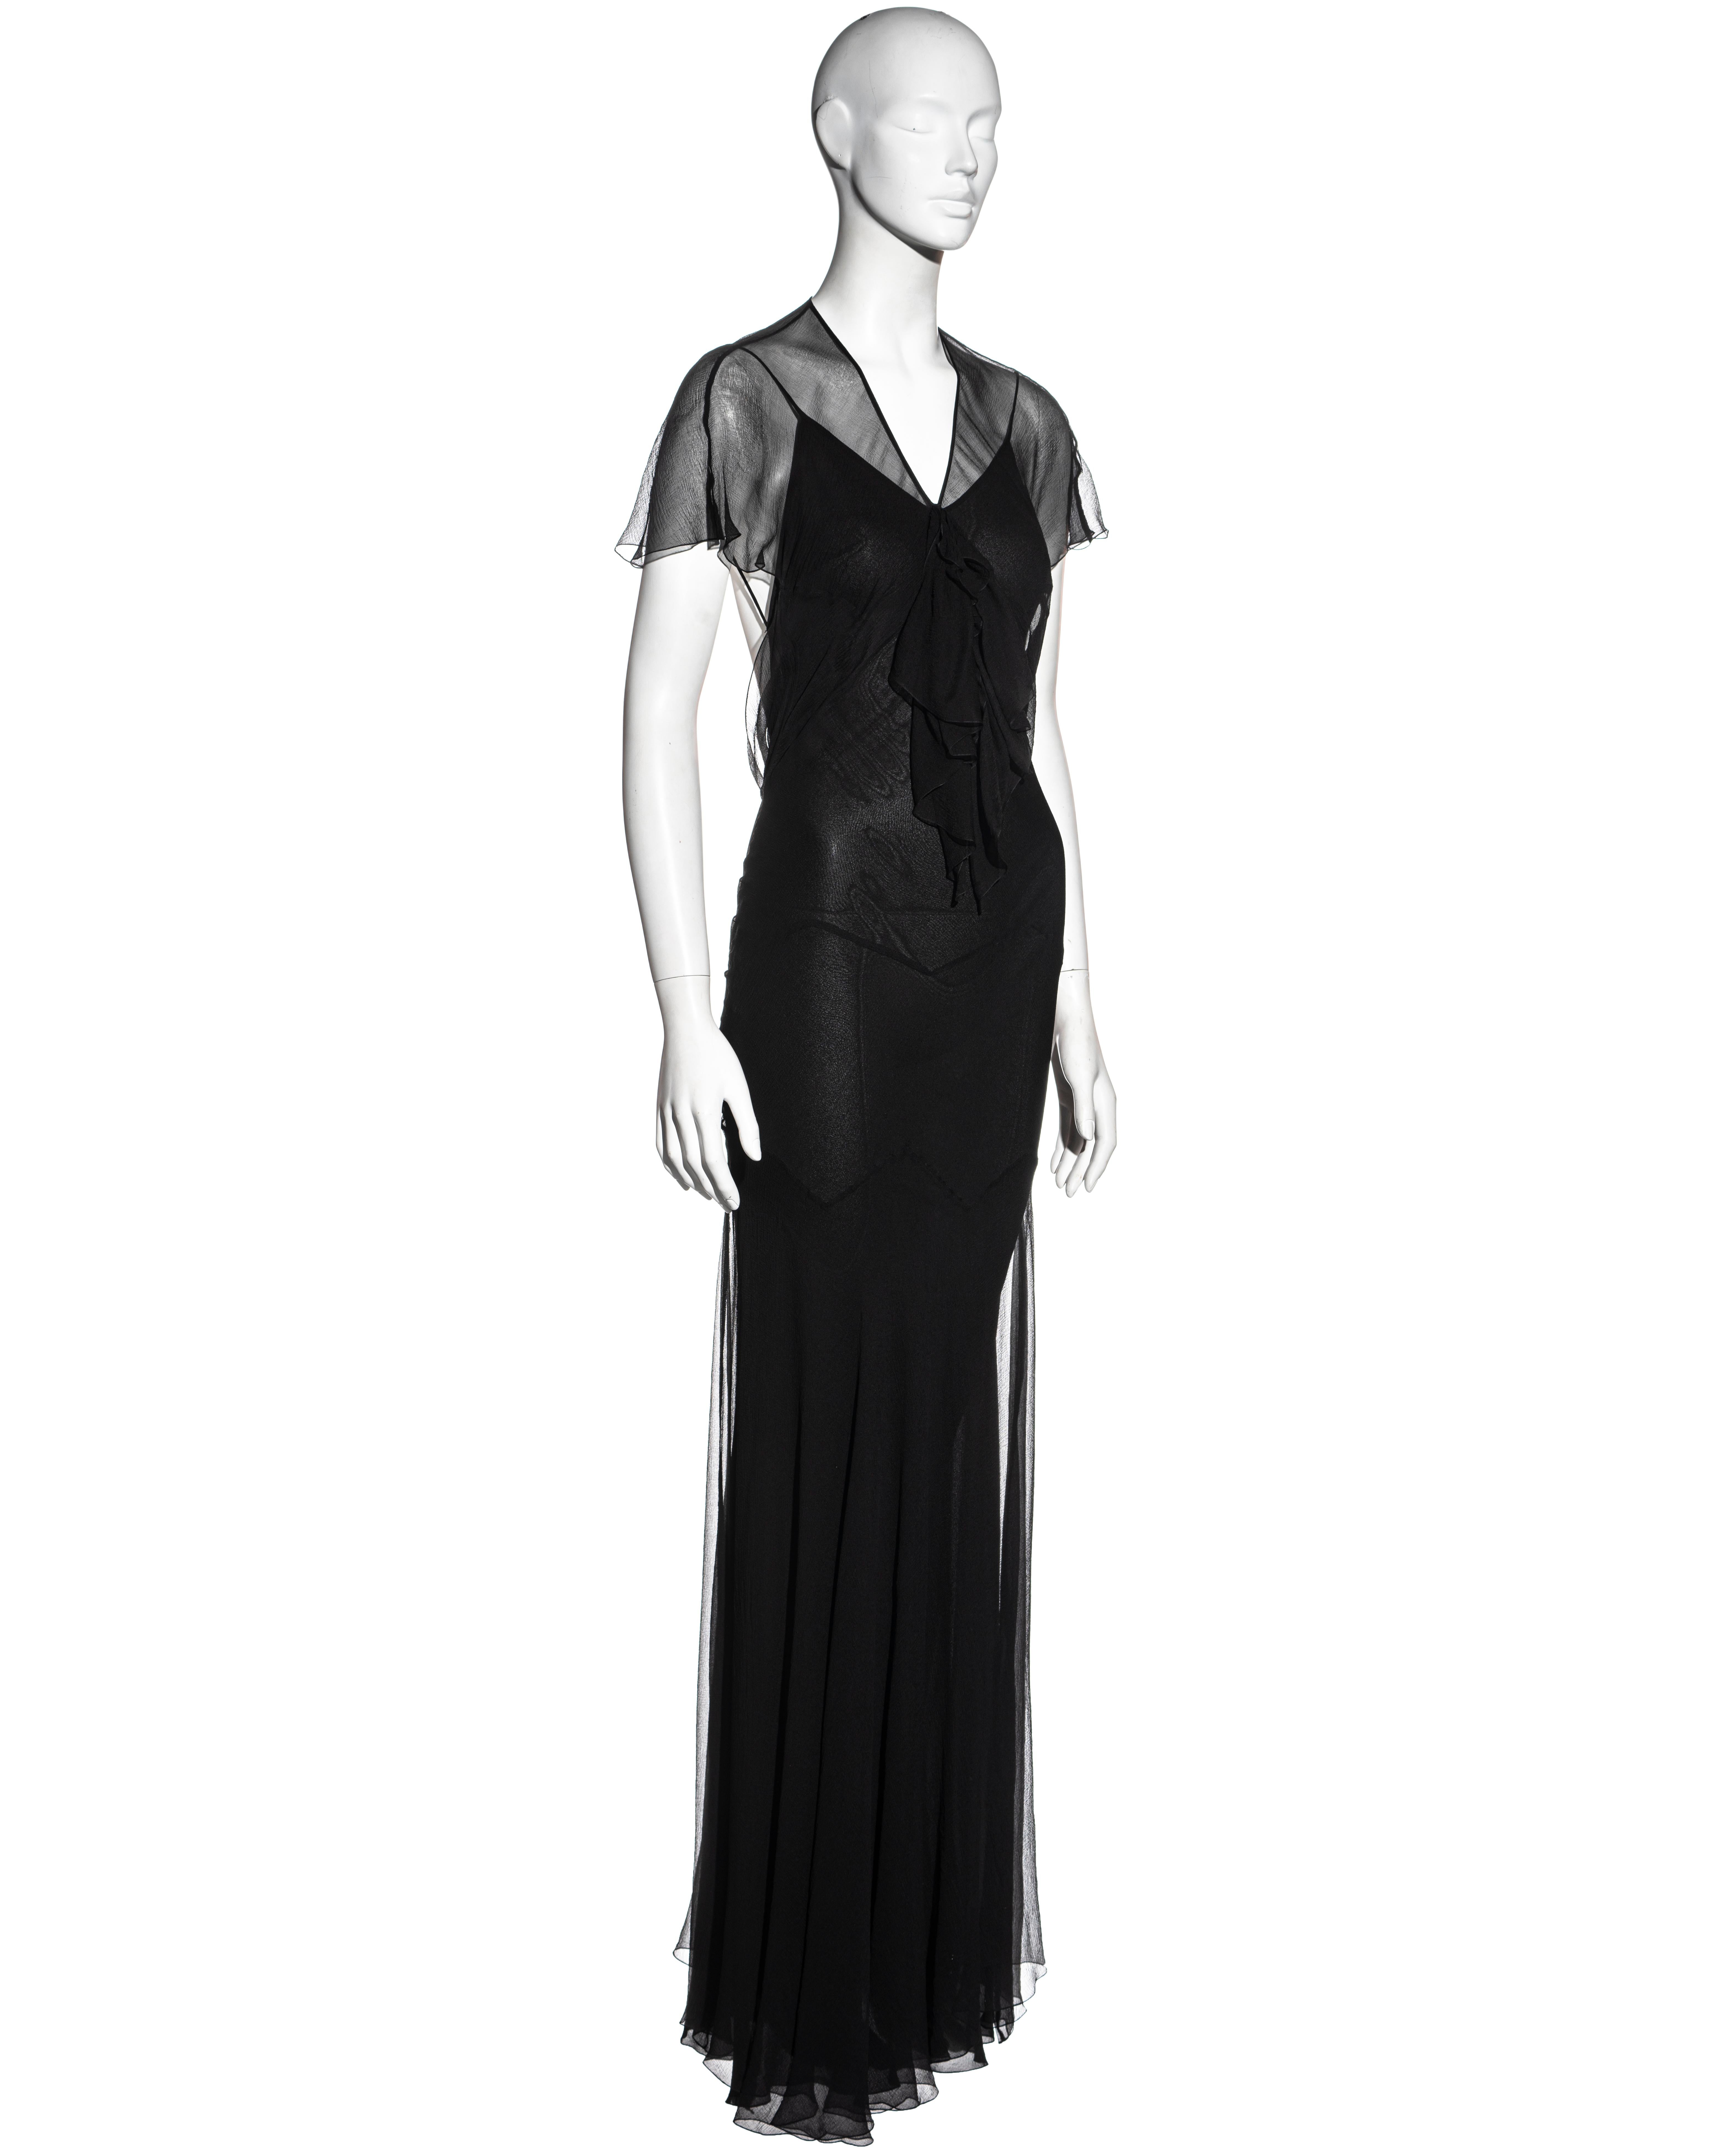 Women's John Galliano black silk chiffon double layered bias cut dress, c. 1995 - 1999